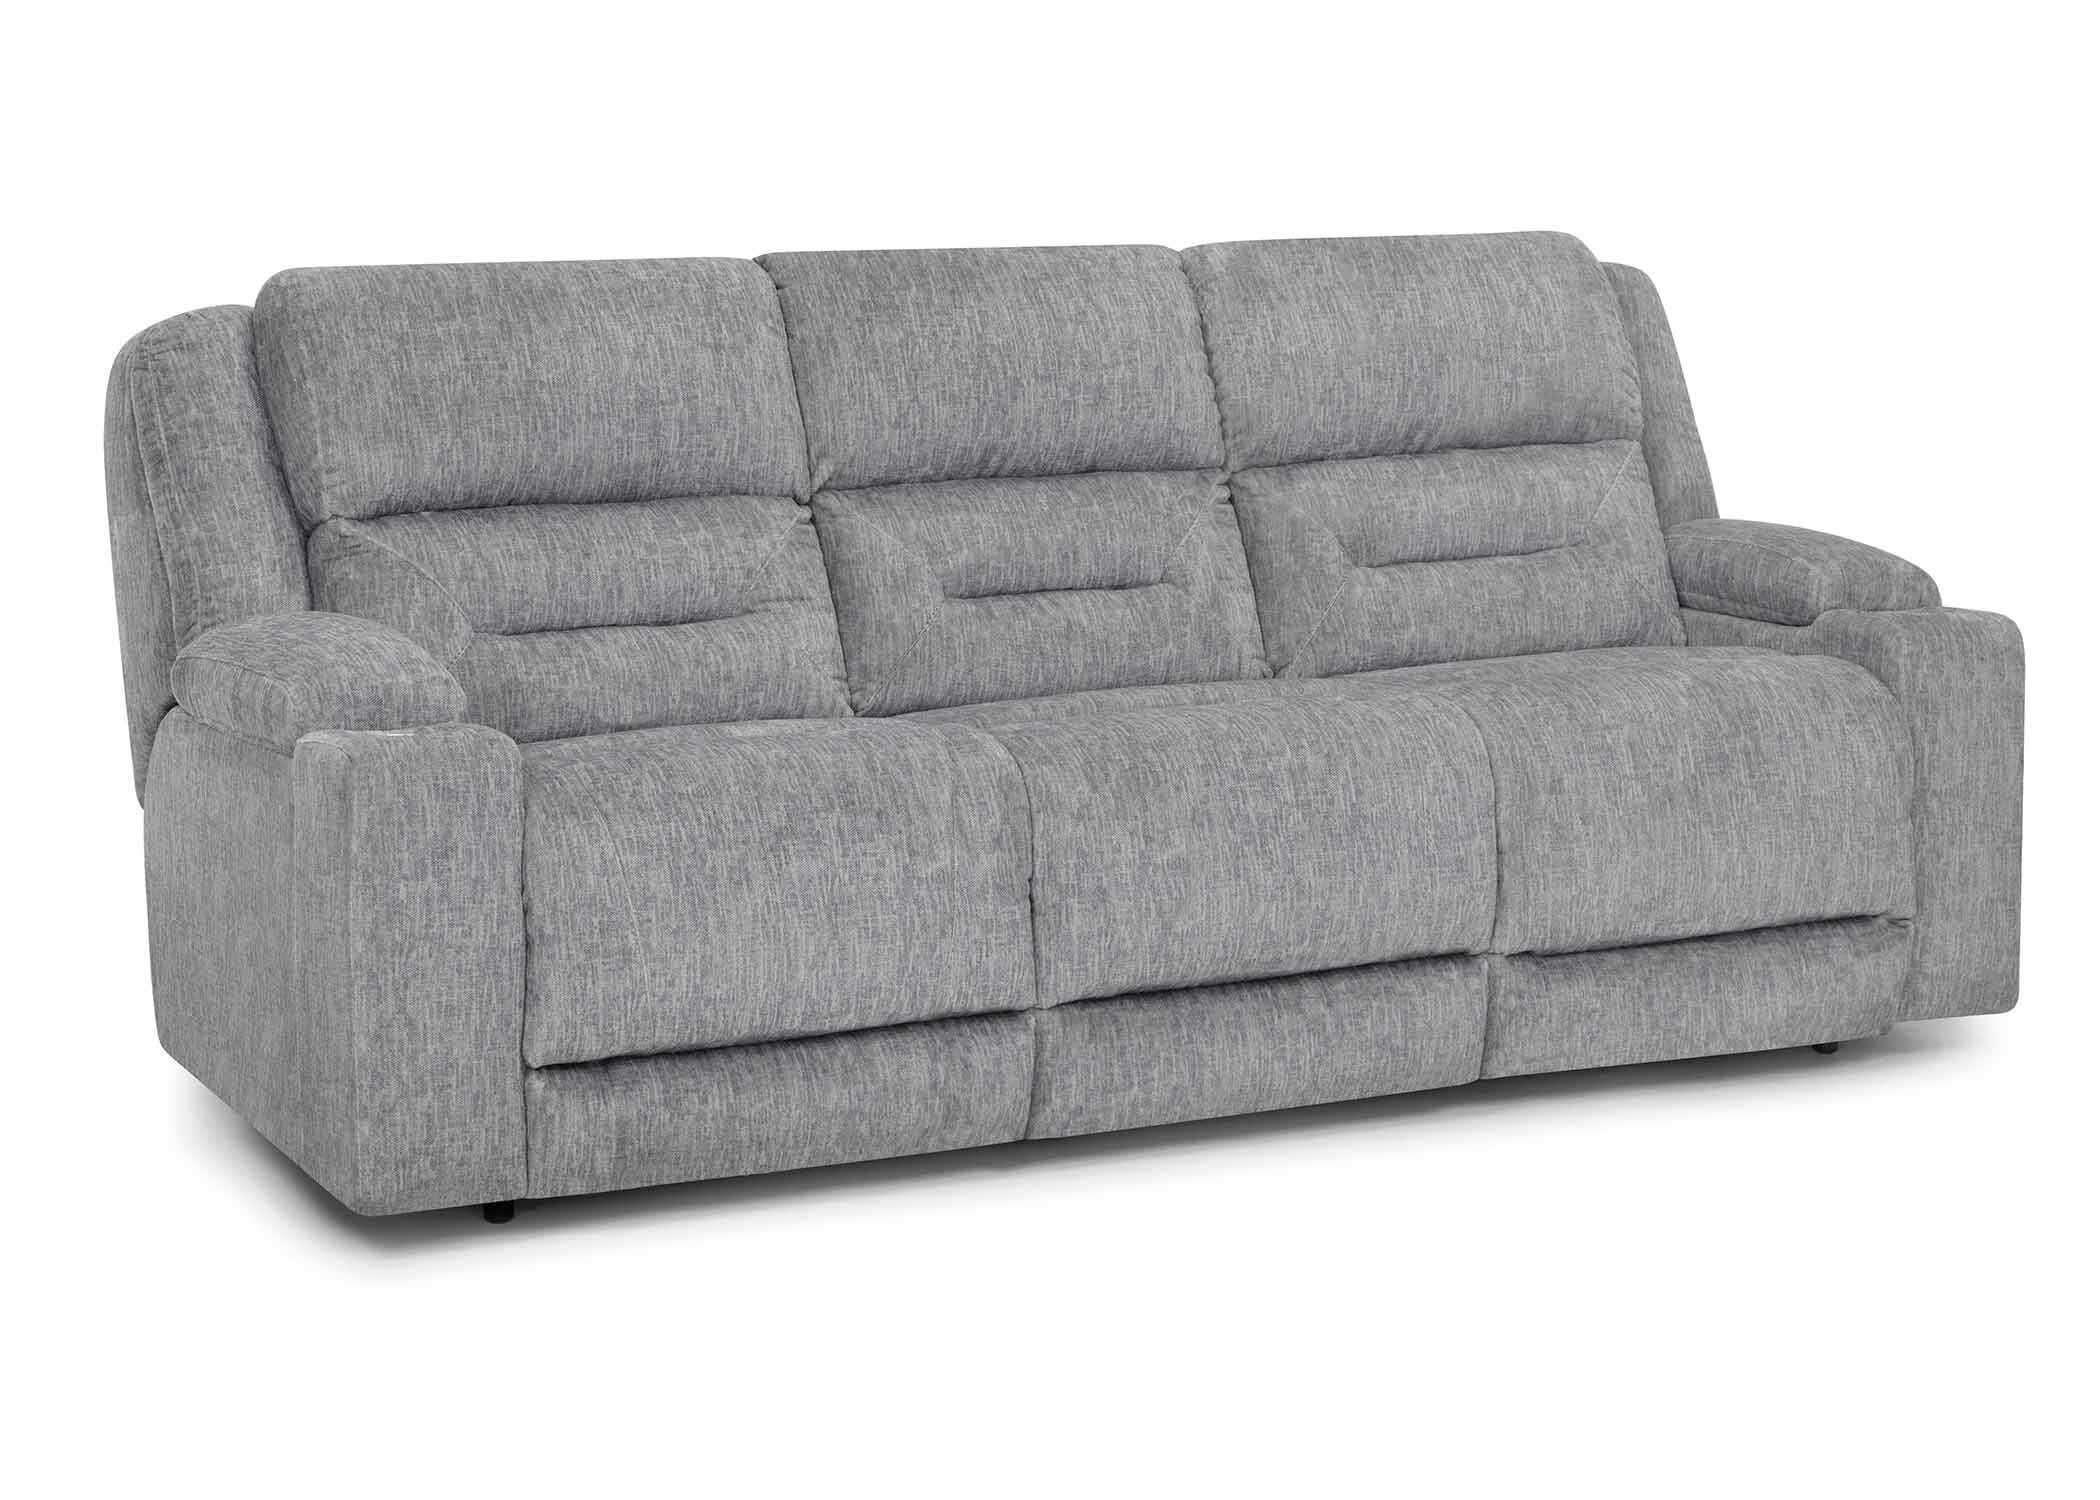  65247 Ace Reclining Sofa in 1015-06 Plush Gray - Angled 